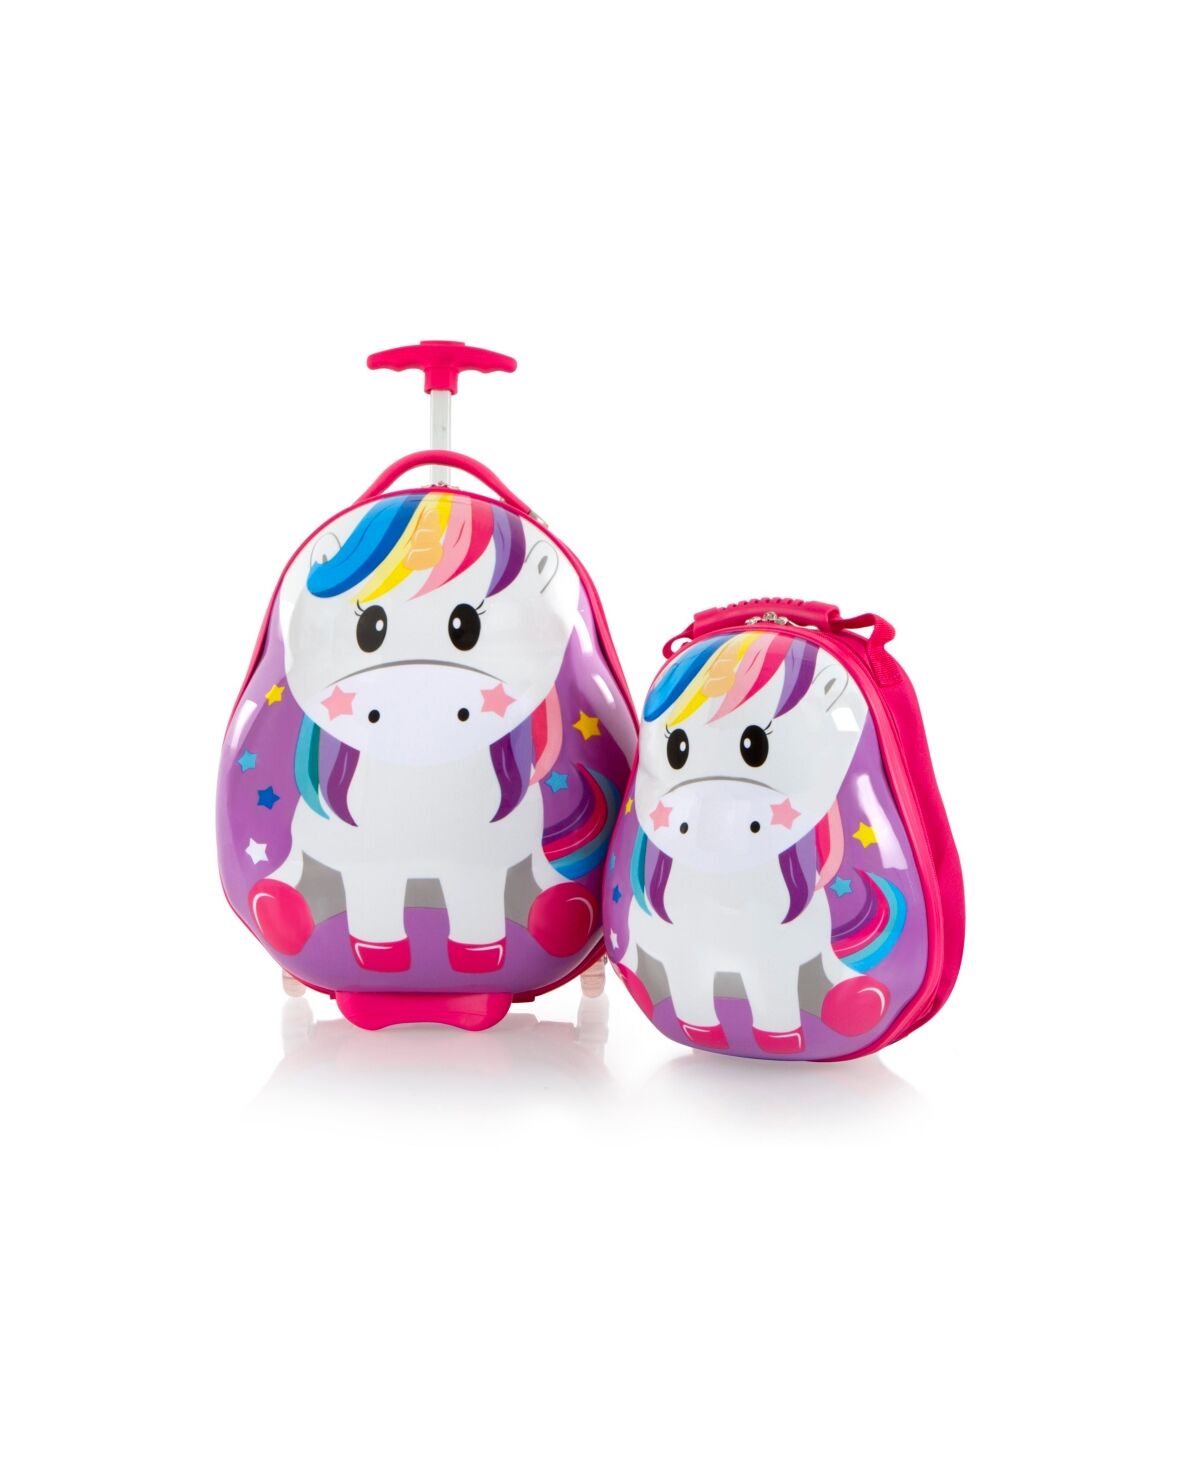 Heys Travel Tots 2 Piece Unicorn Lightweight Kids Luggage and Backpack Set - Pink, Multi